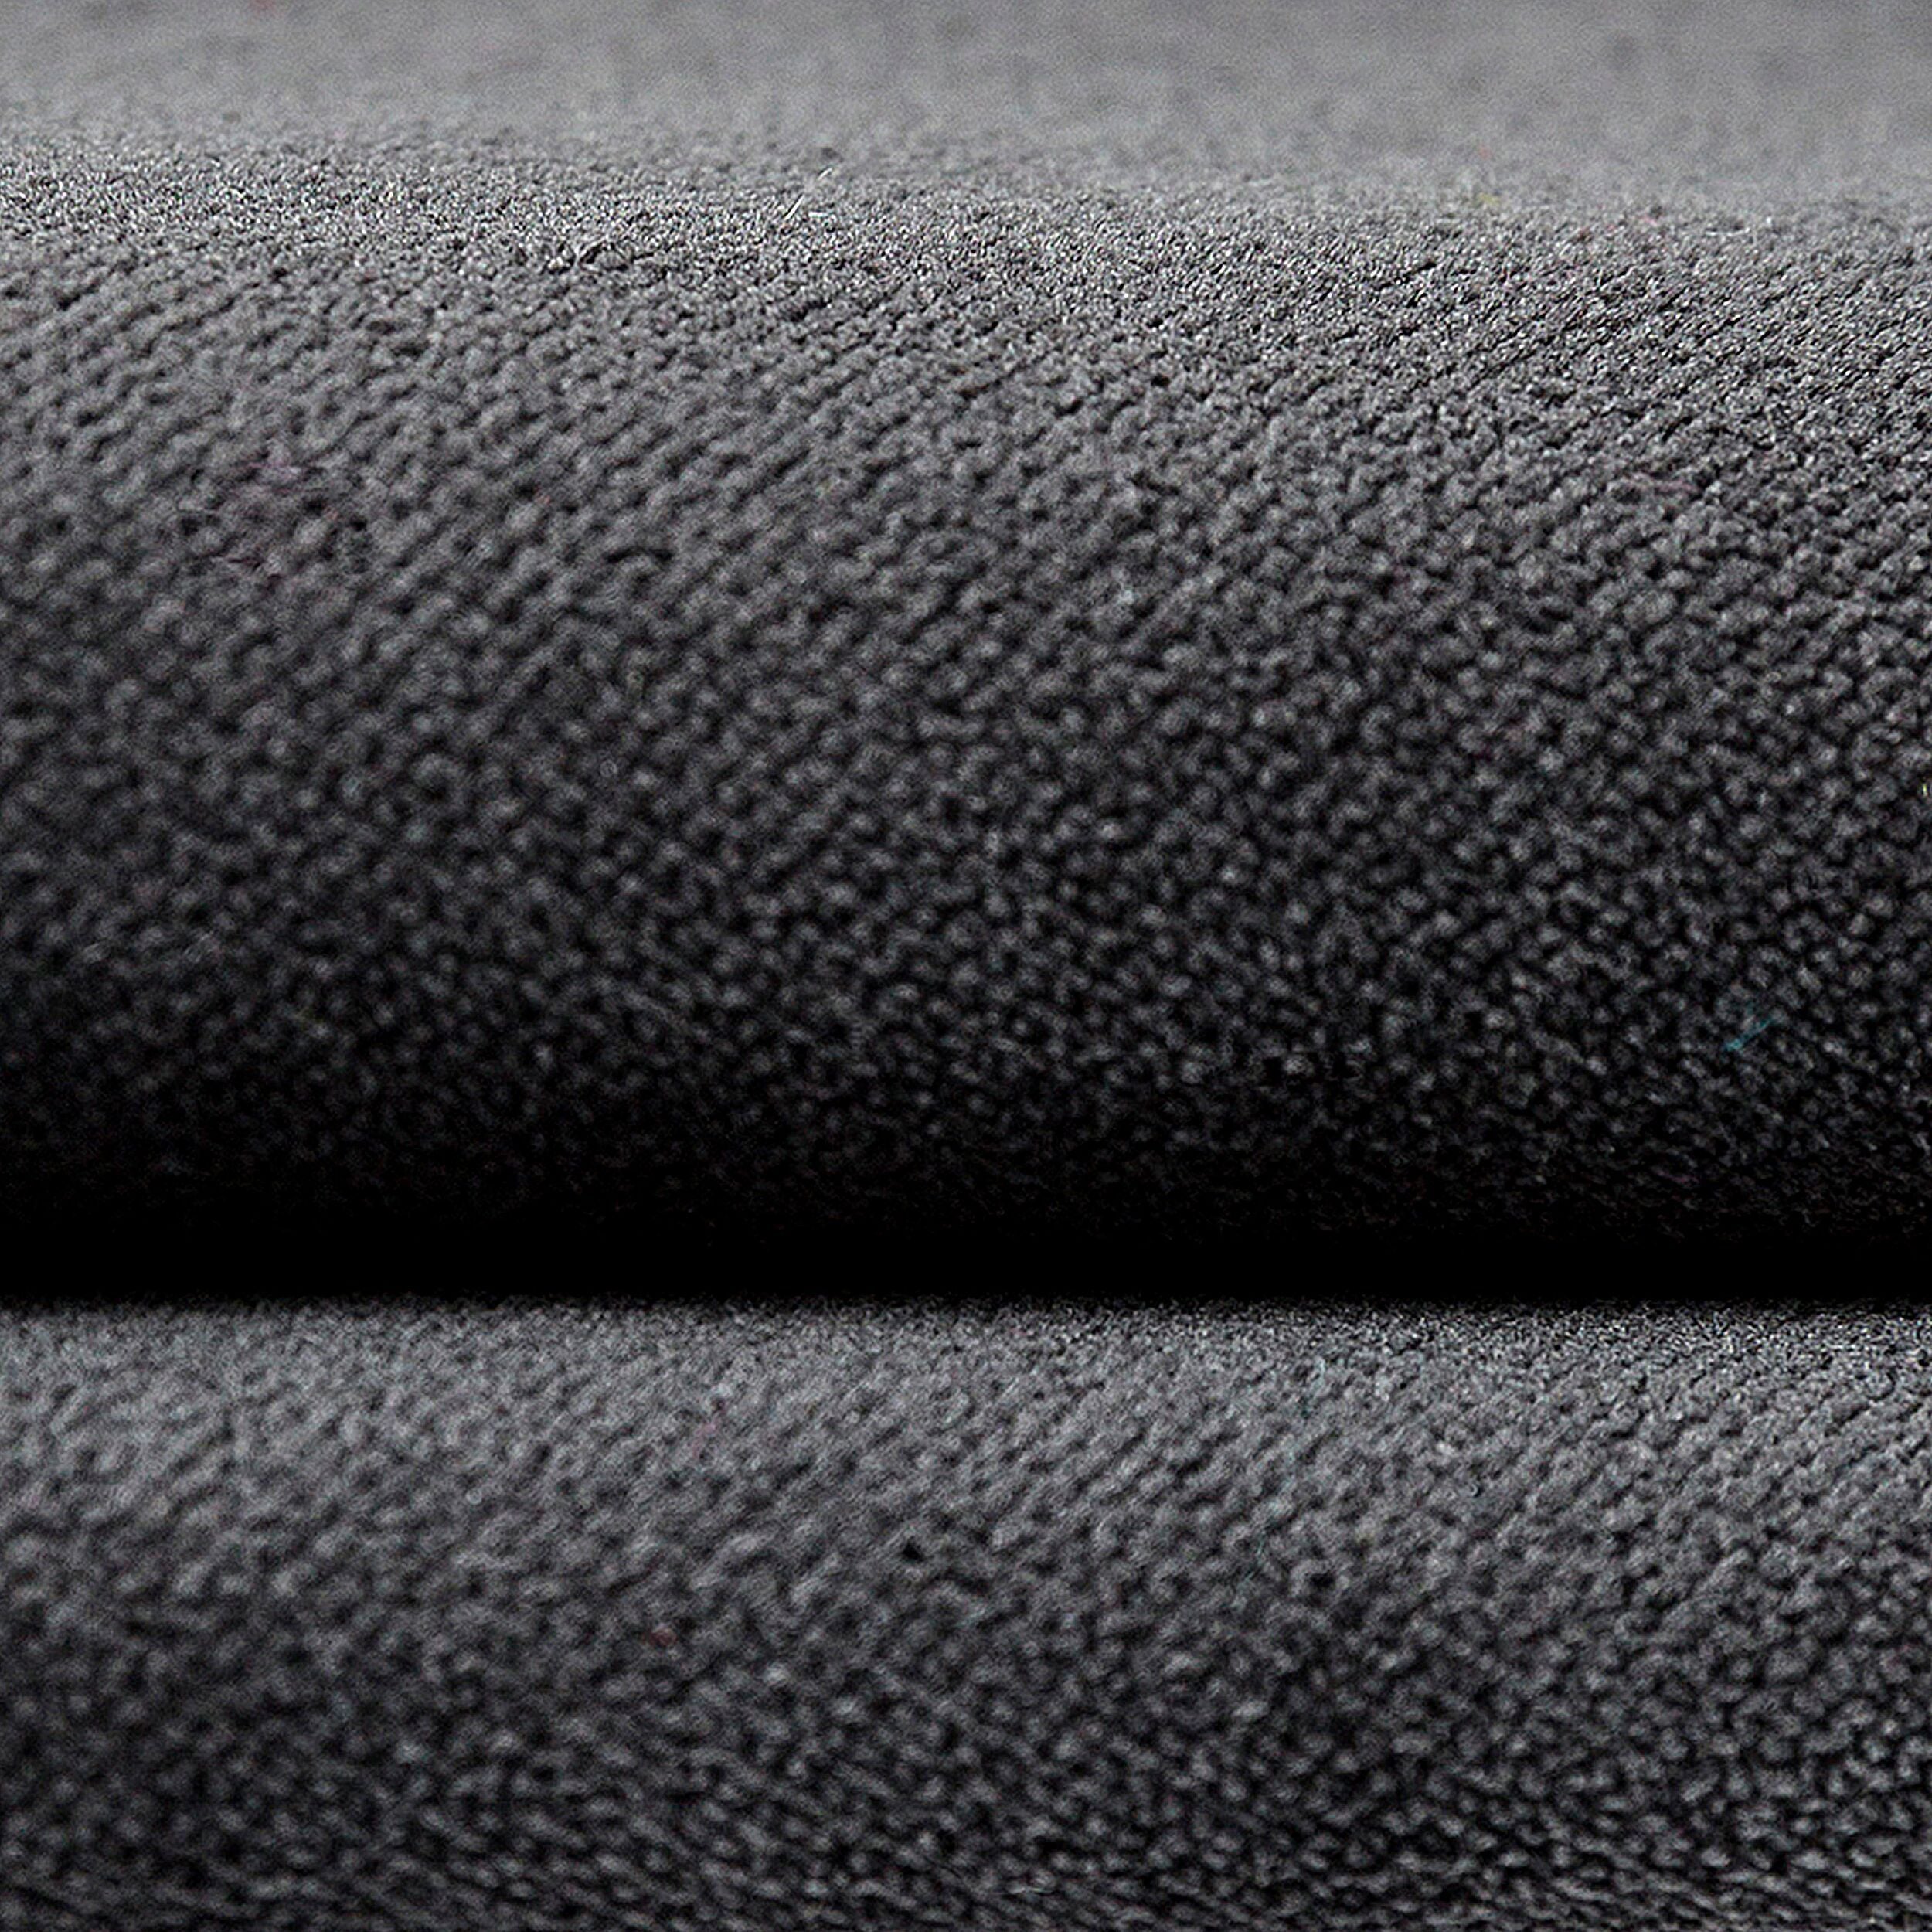 McAlister Textiles Matt Charcoal Grey Velvet 43cm x 43cm Cushion Sets Cushions and Covers 